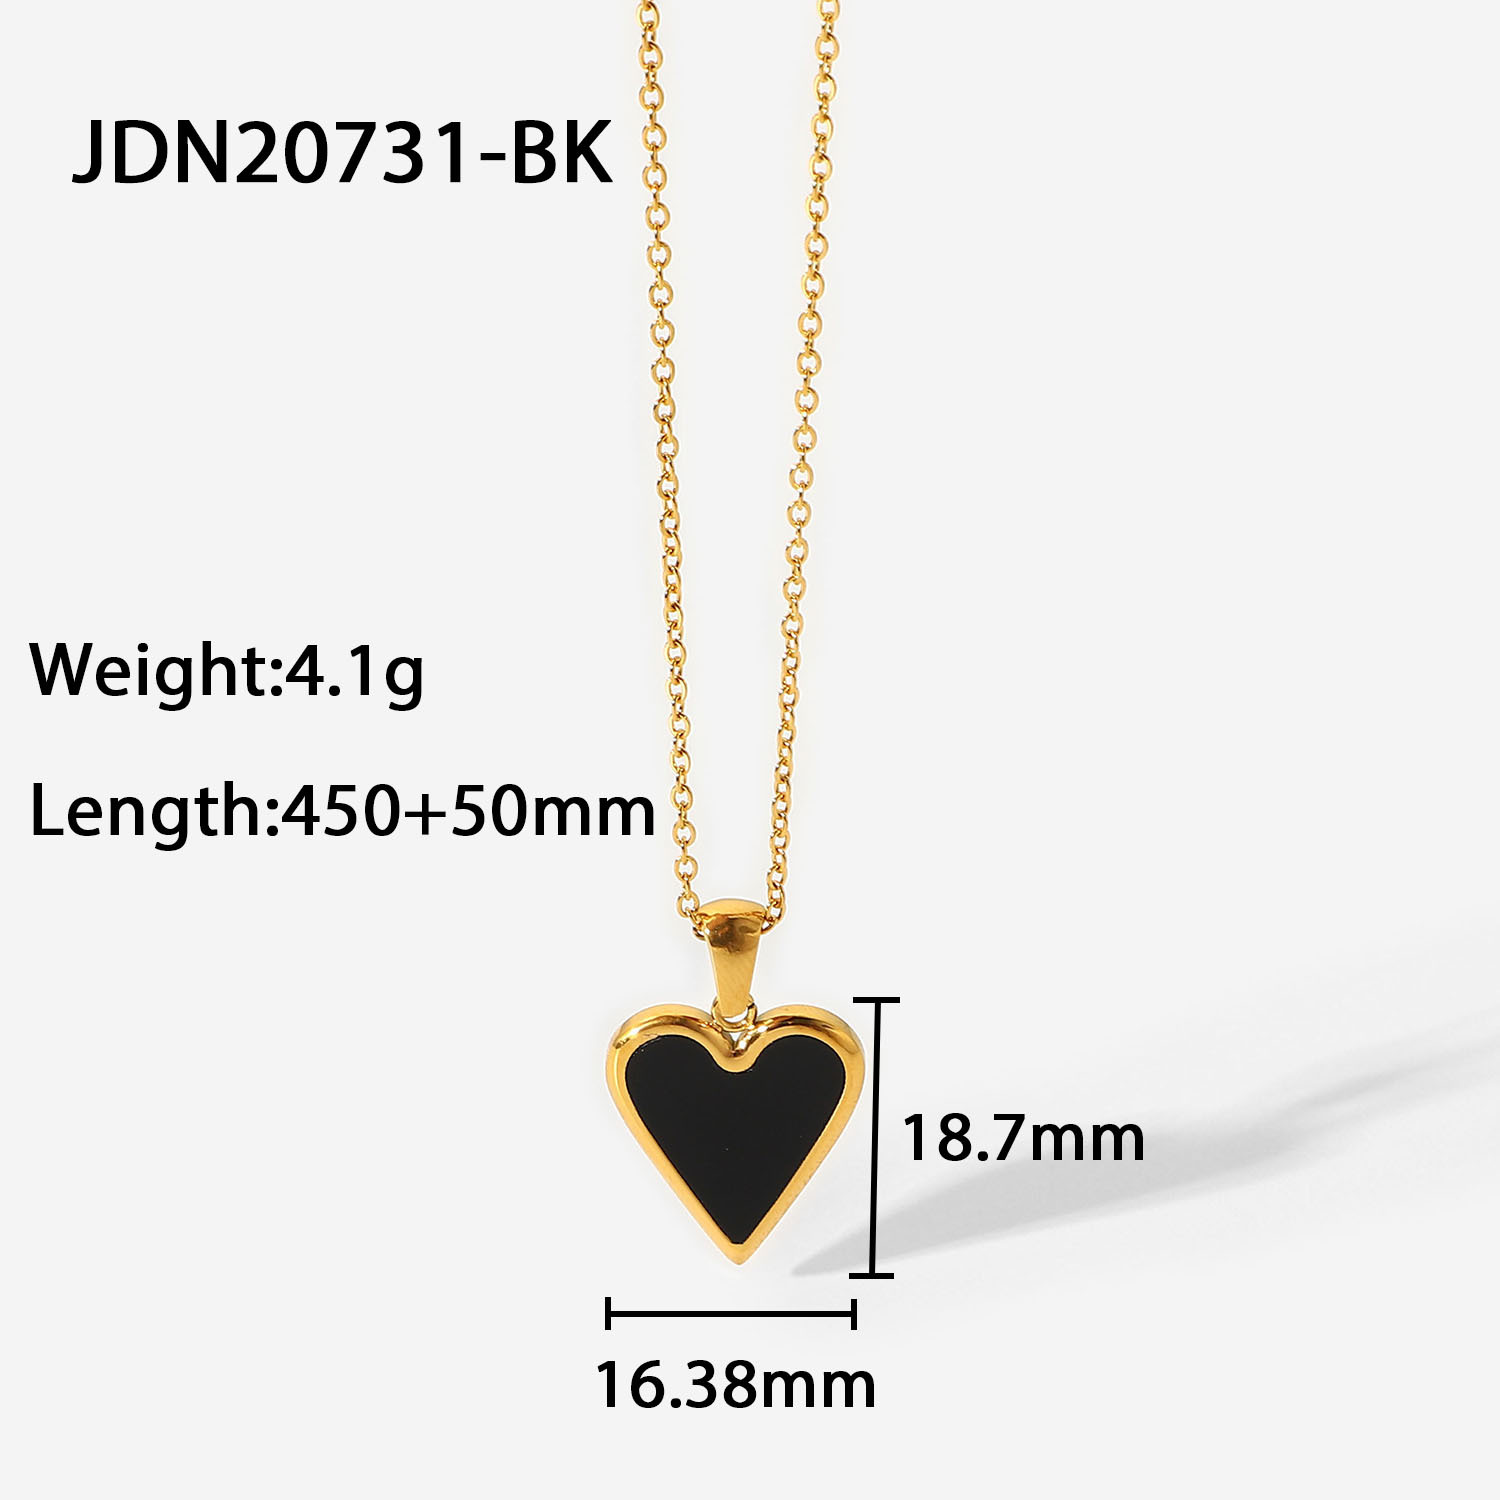 JDN20731-BK size